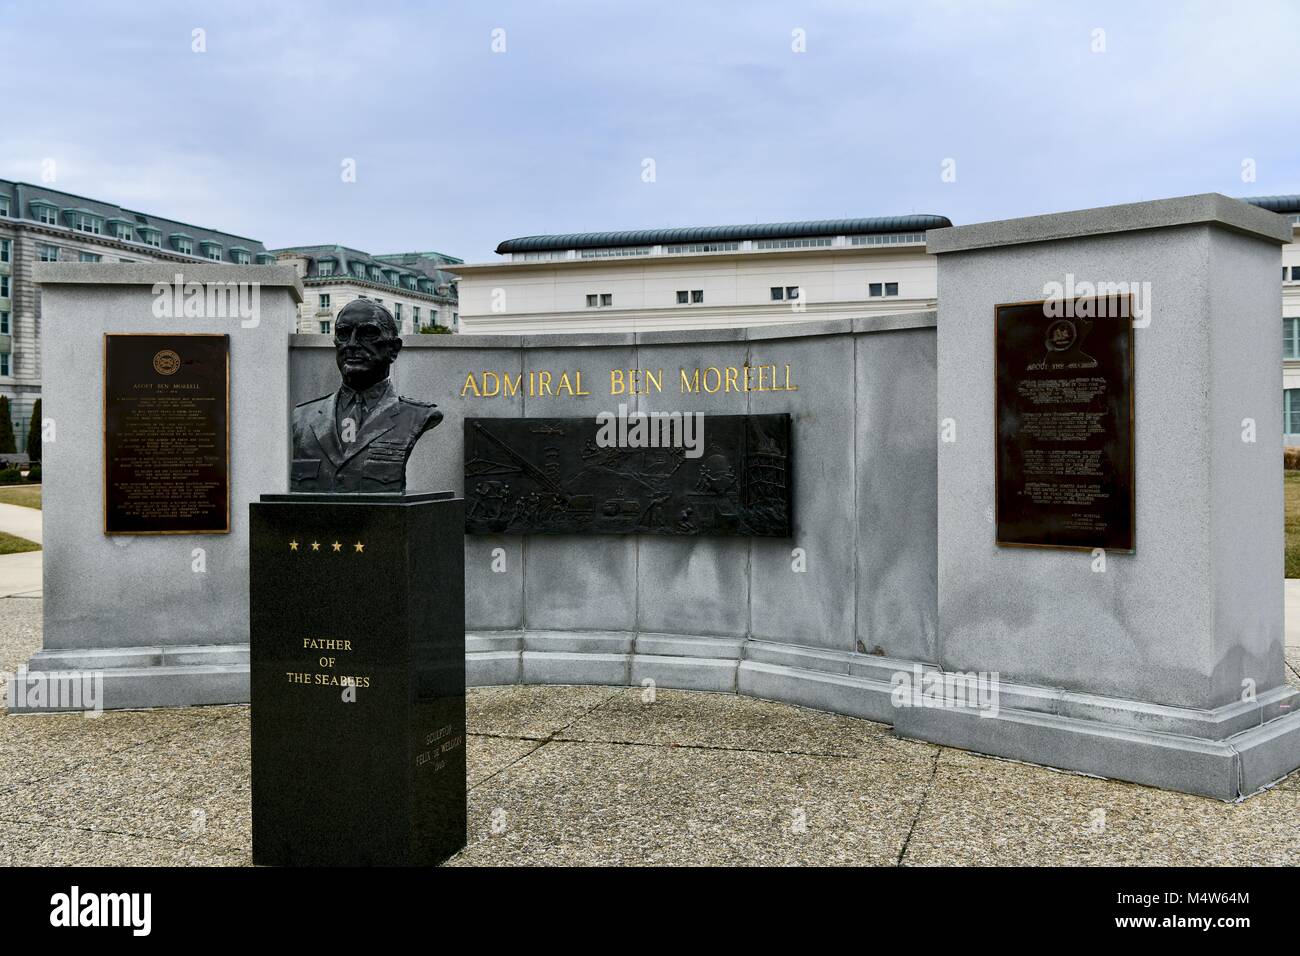 L'amiral Ben Moreell "Le père des Seabees' statue au United States Naval Academy, Annapolis, MD, USA Banque D'Images